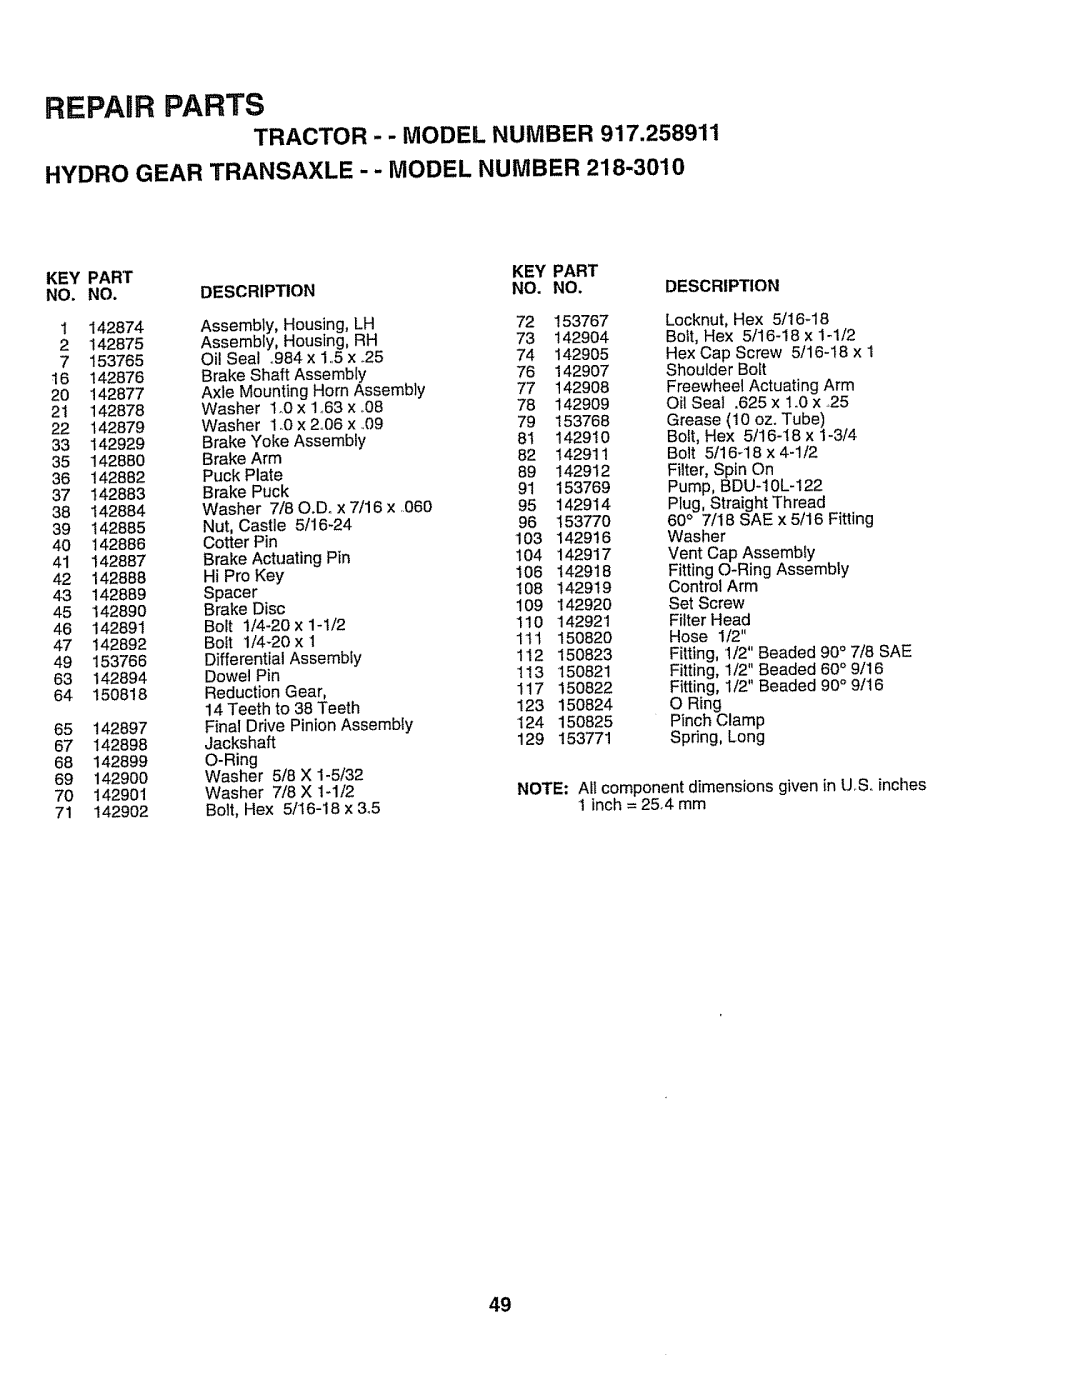 Craftsman 917.258911 Hydro Gear Transaxle - - Model Number, No. No, Descrip_On, Repair Parts, Tractor - - Model Number 